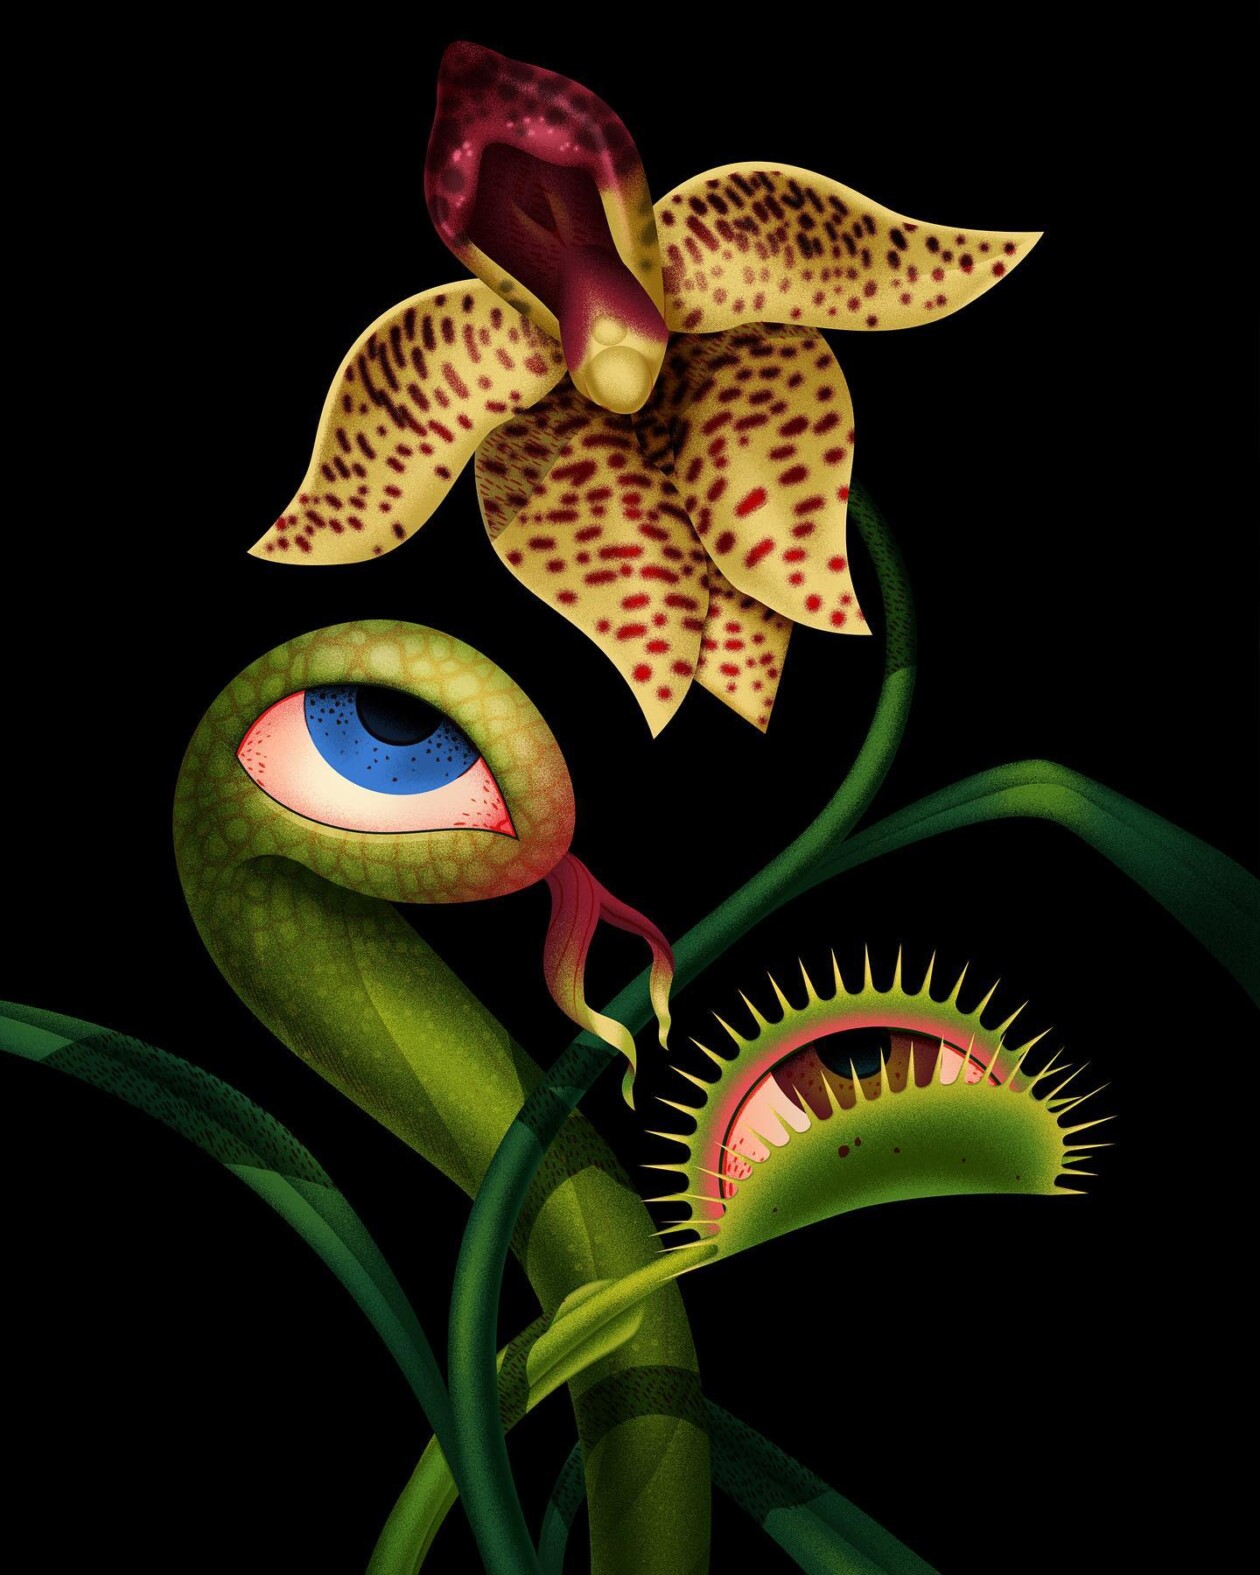 Marvelous Surrealistic Illustrations Of Eyes Peering From Plants And Animals By Ana Miminoshvili (10)